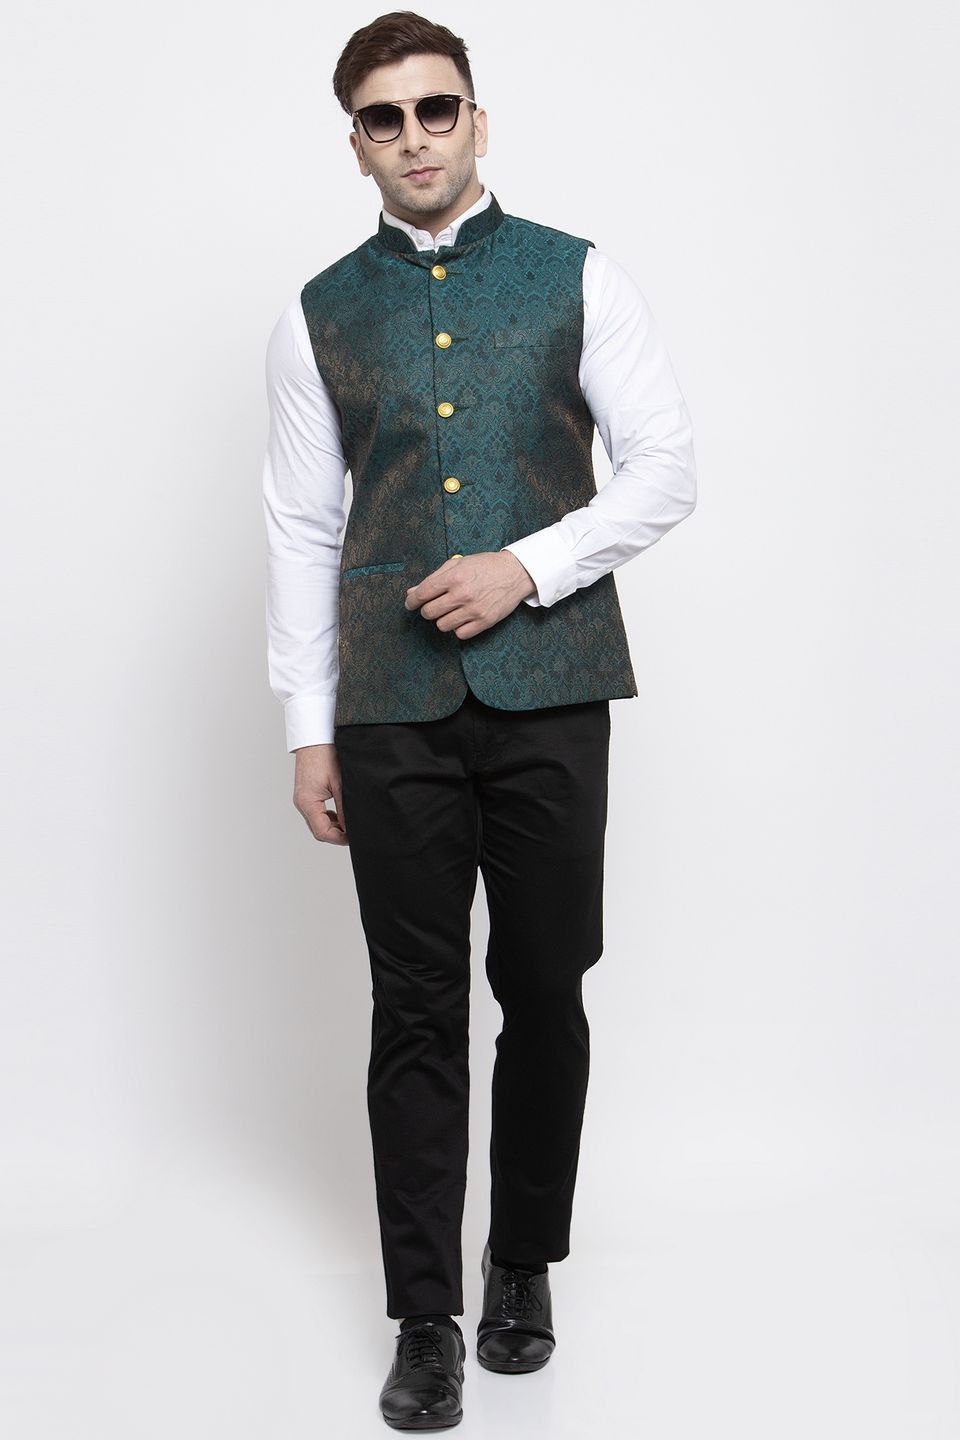 Wintage Men's Banarsi Rayon Cotton Bandhgala Festive Nehru Modi Jacket Waistcoat : Green